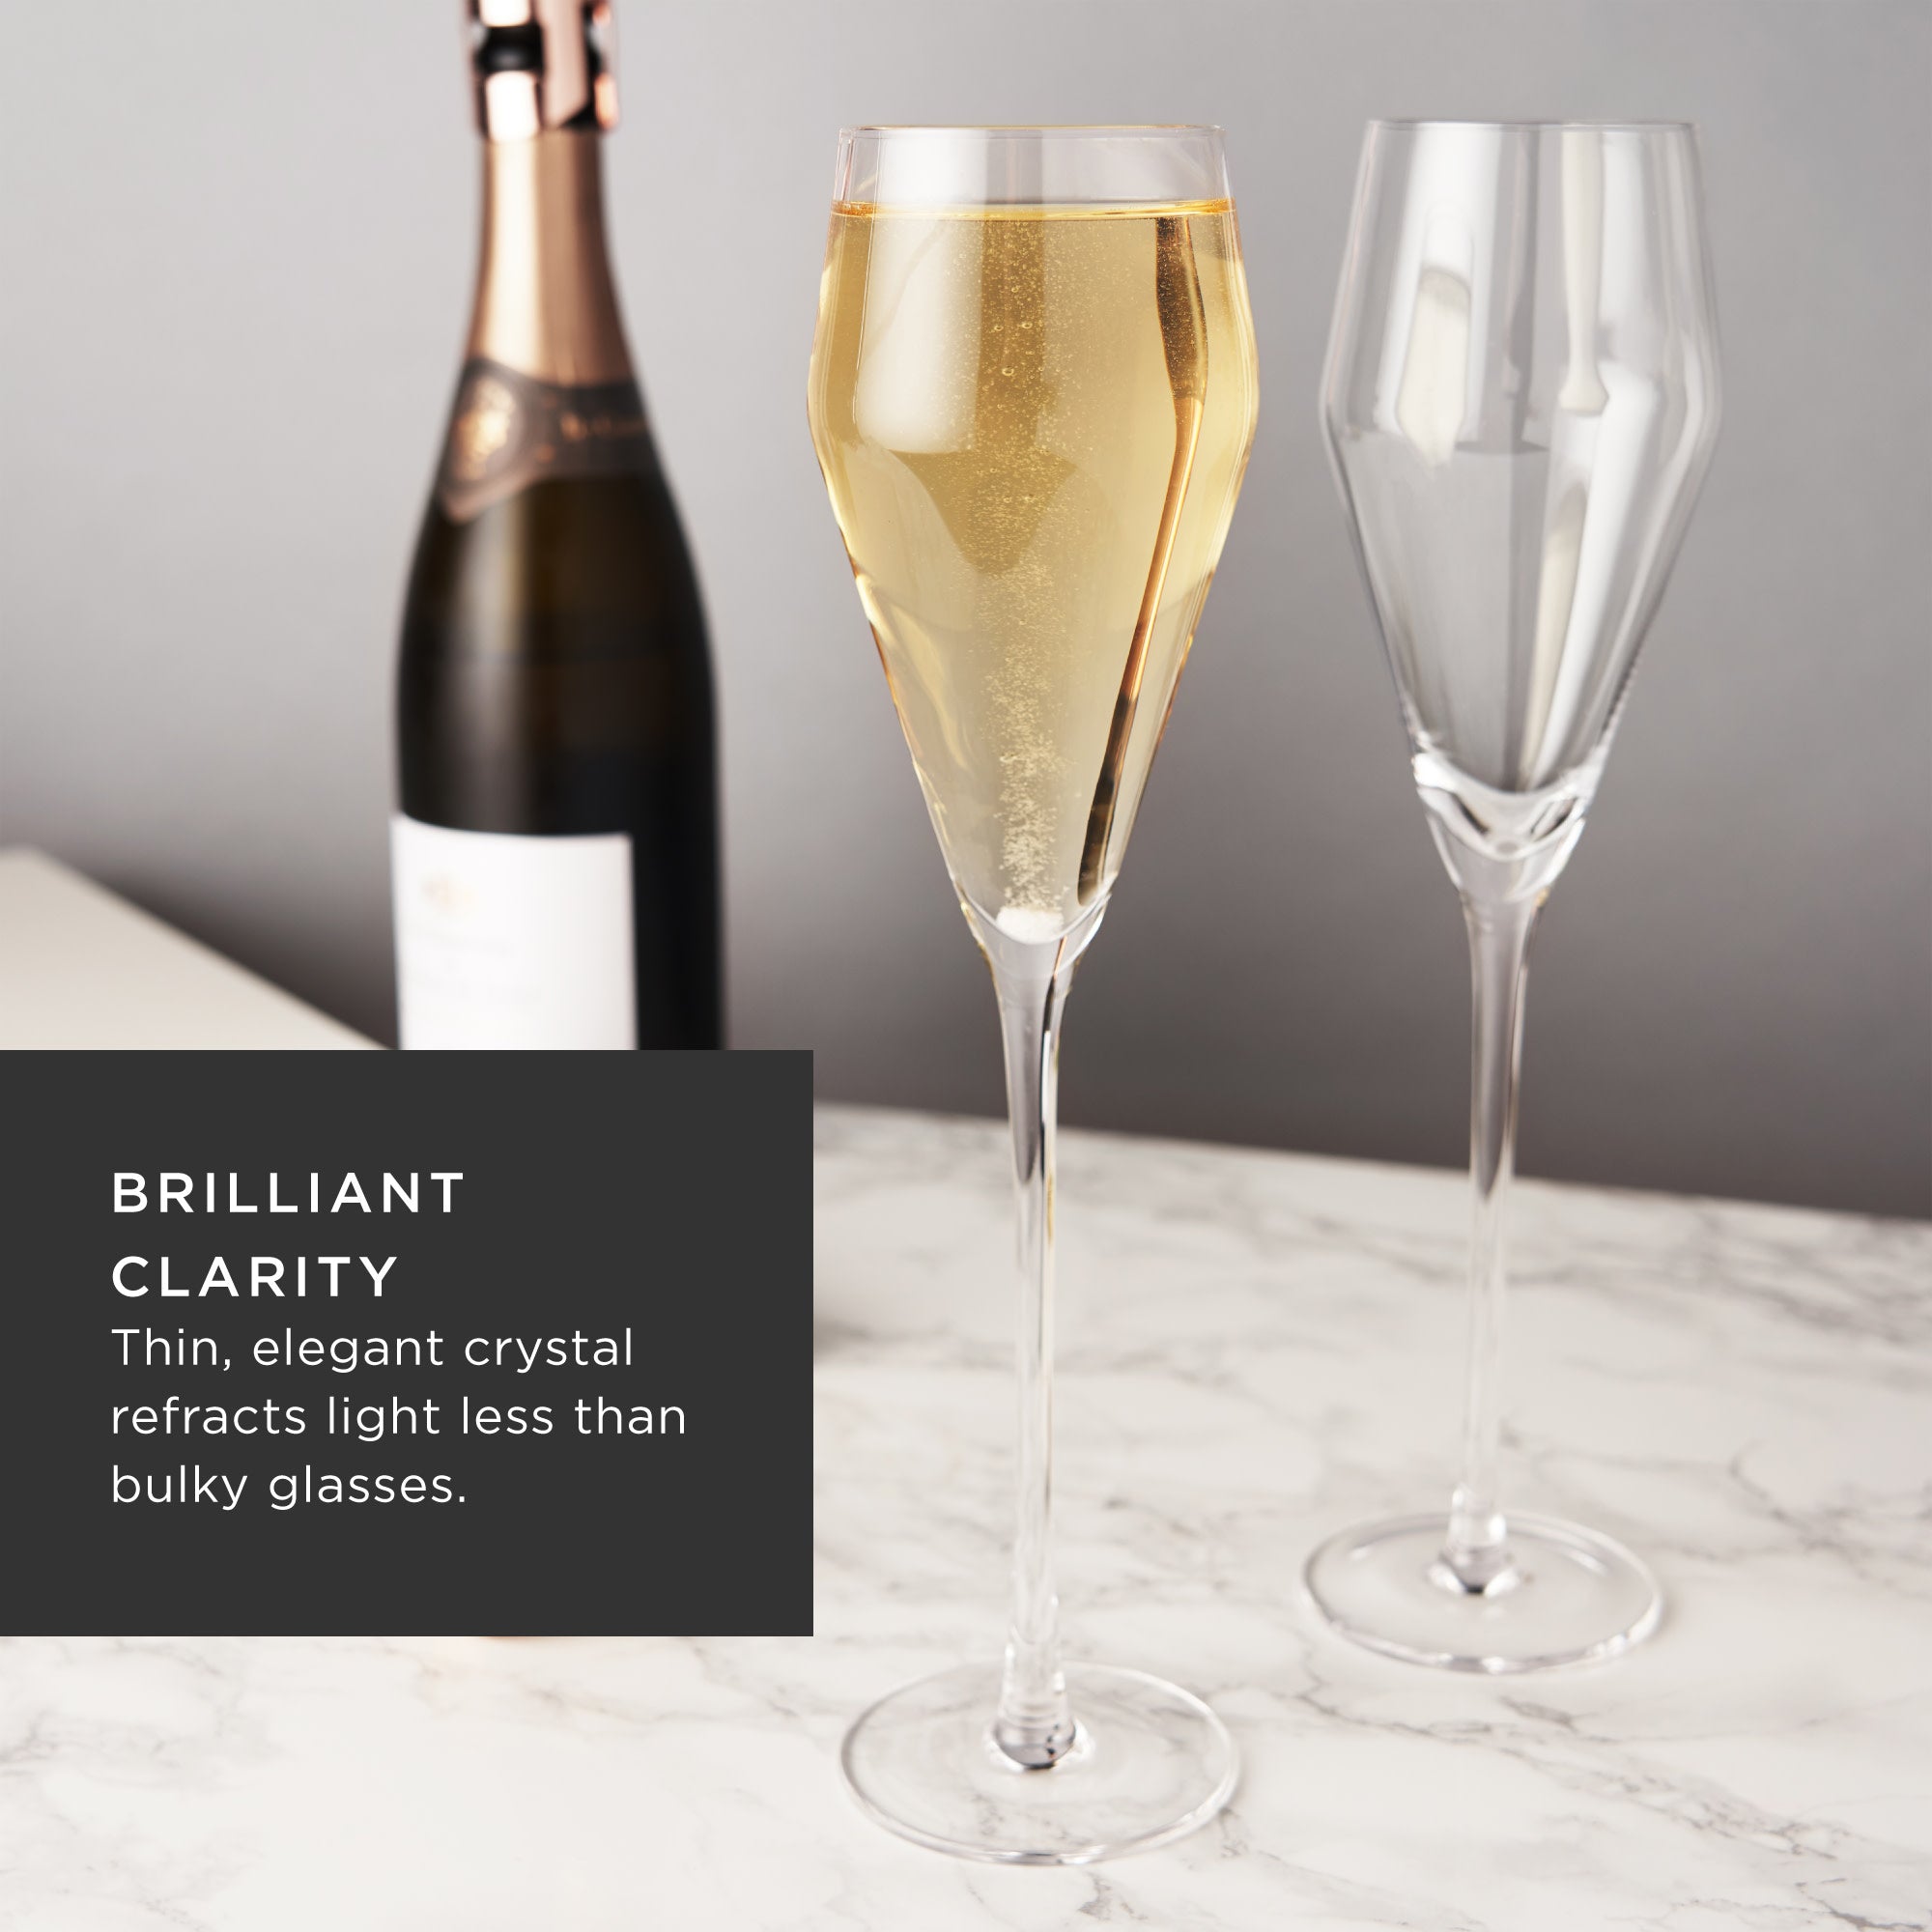 Viski Raye Angled Crystal Champagne Flutes Set of 2 - Premium